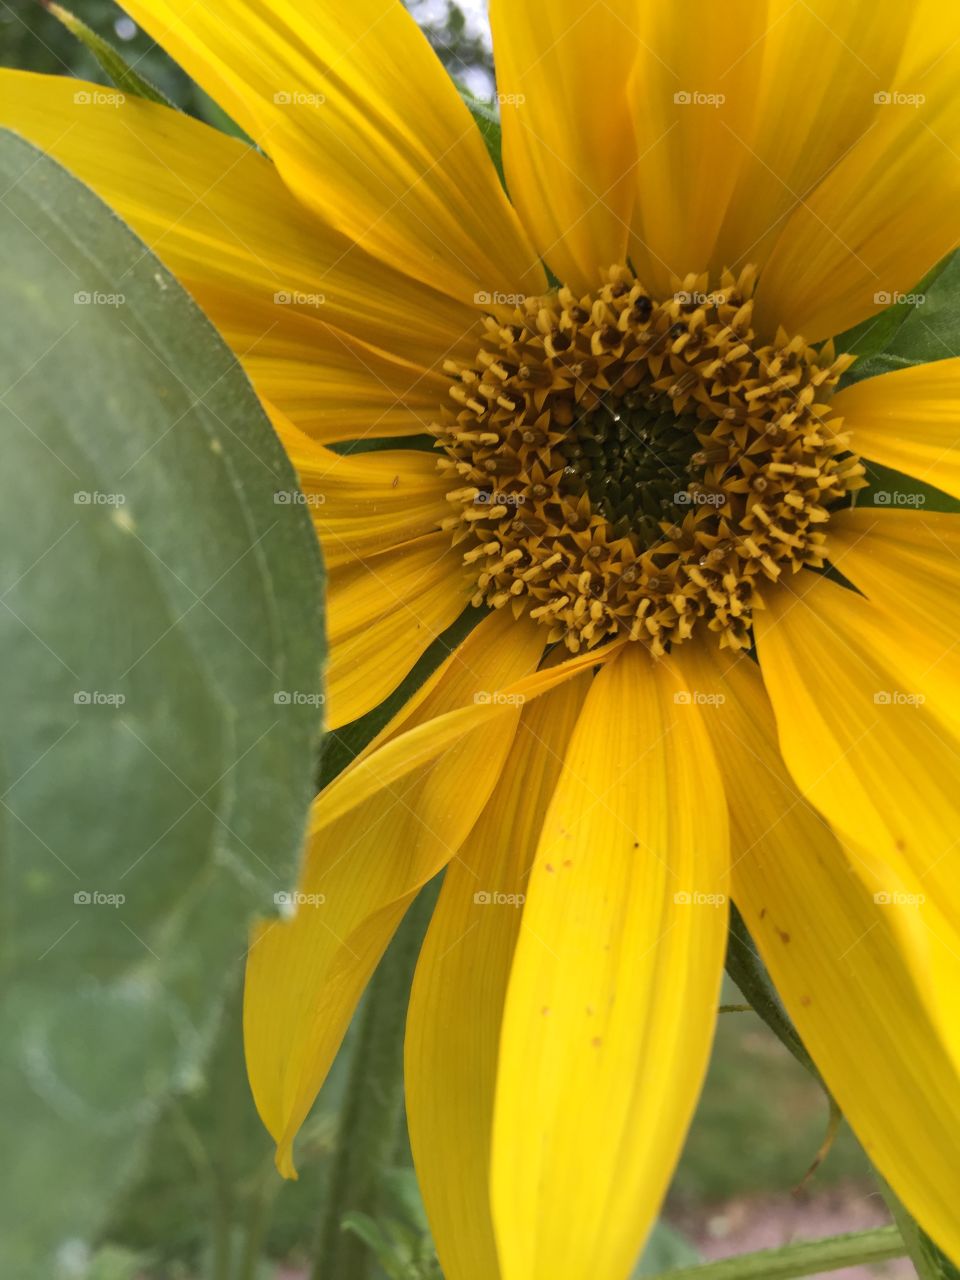 I love sunflowers